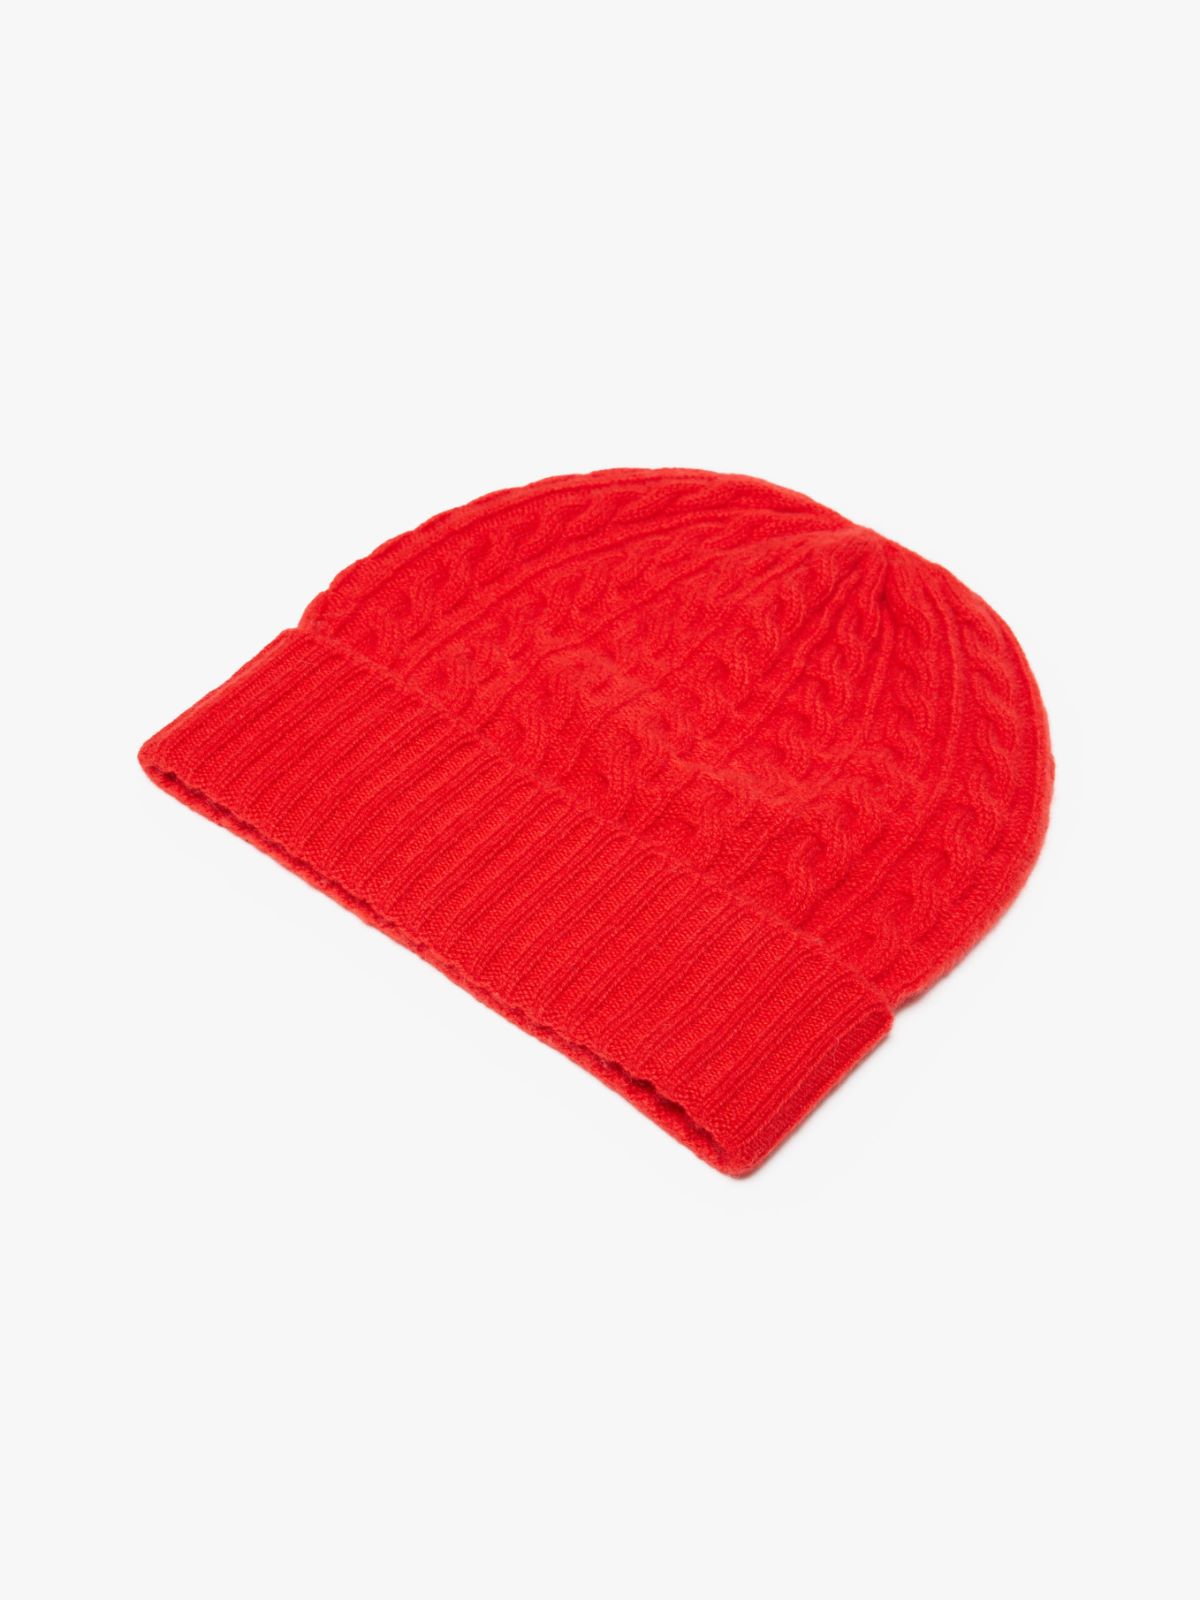 Cashmere hat - RED - Weekend Max Mara - 2